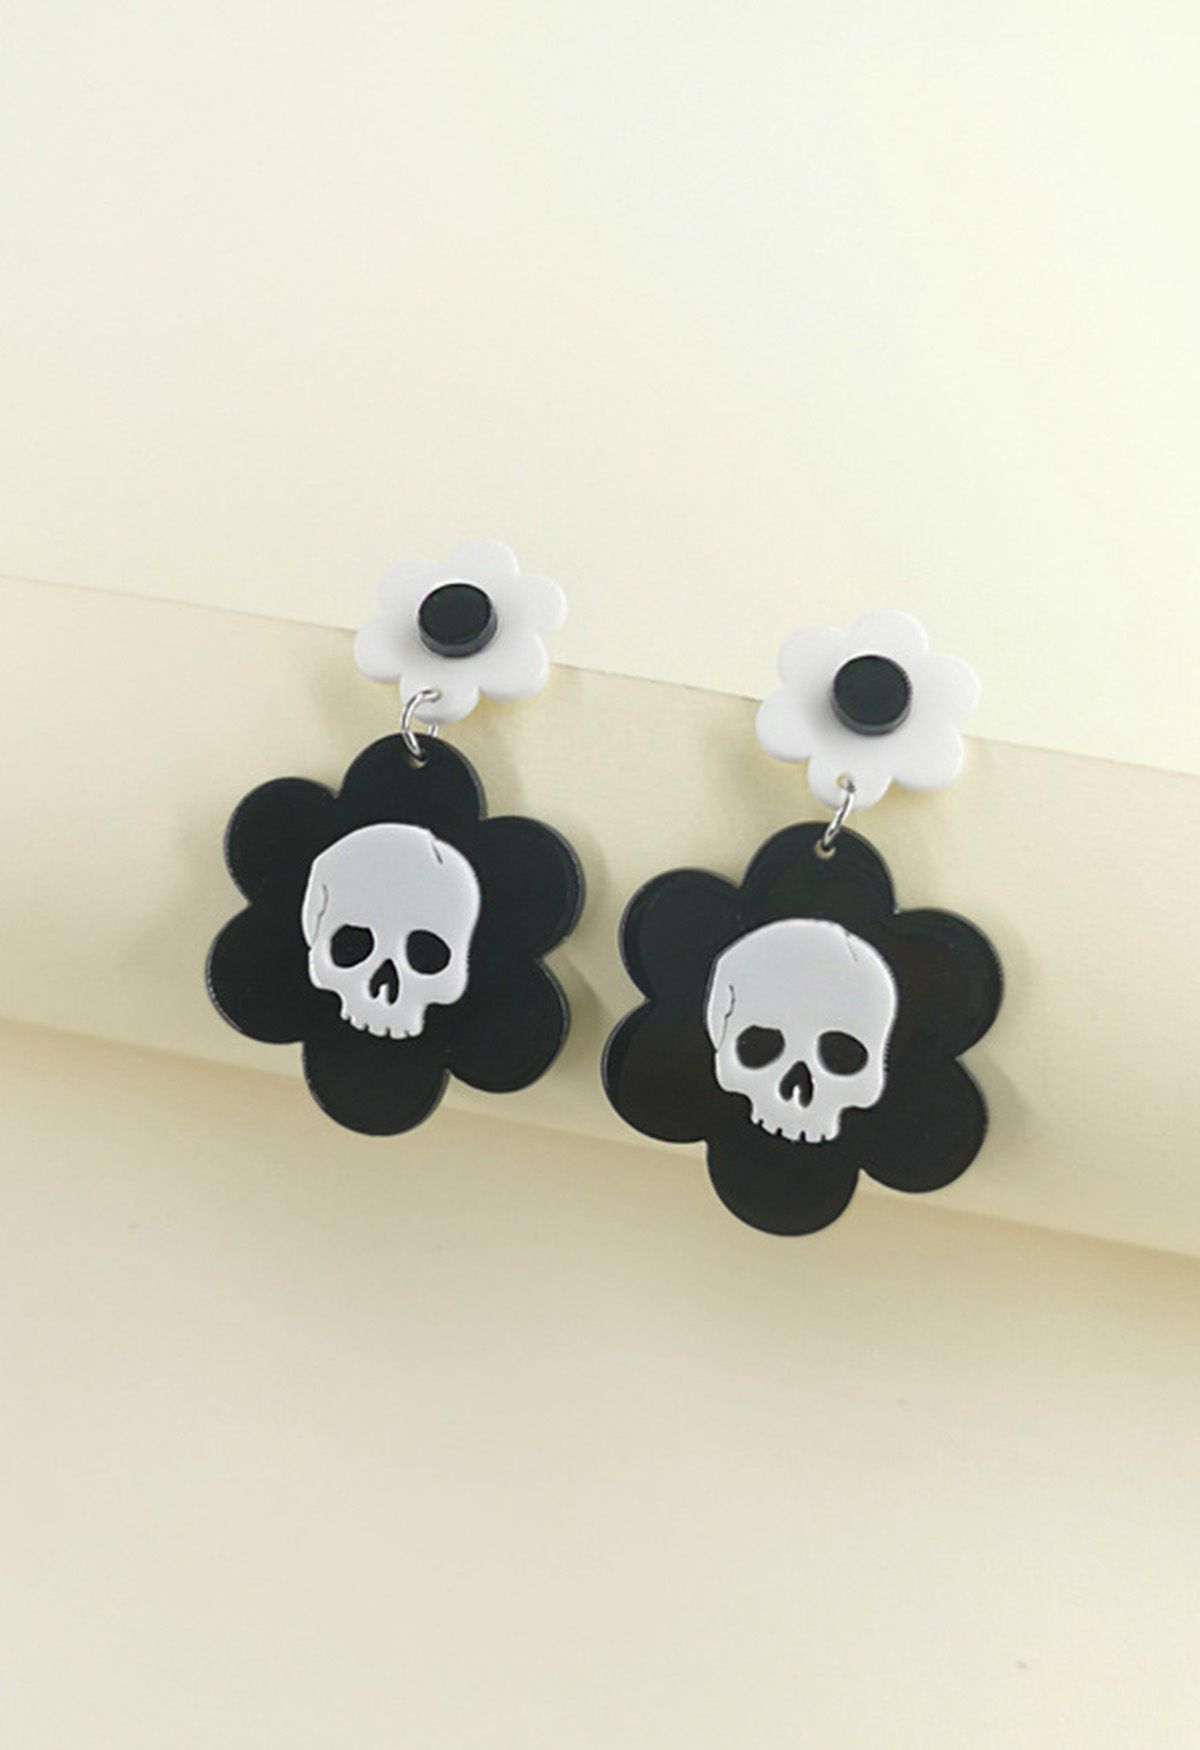 Black and White Skeleton Floral Earrings